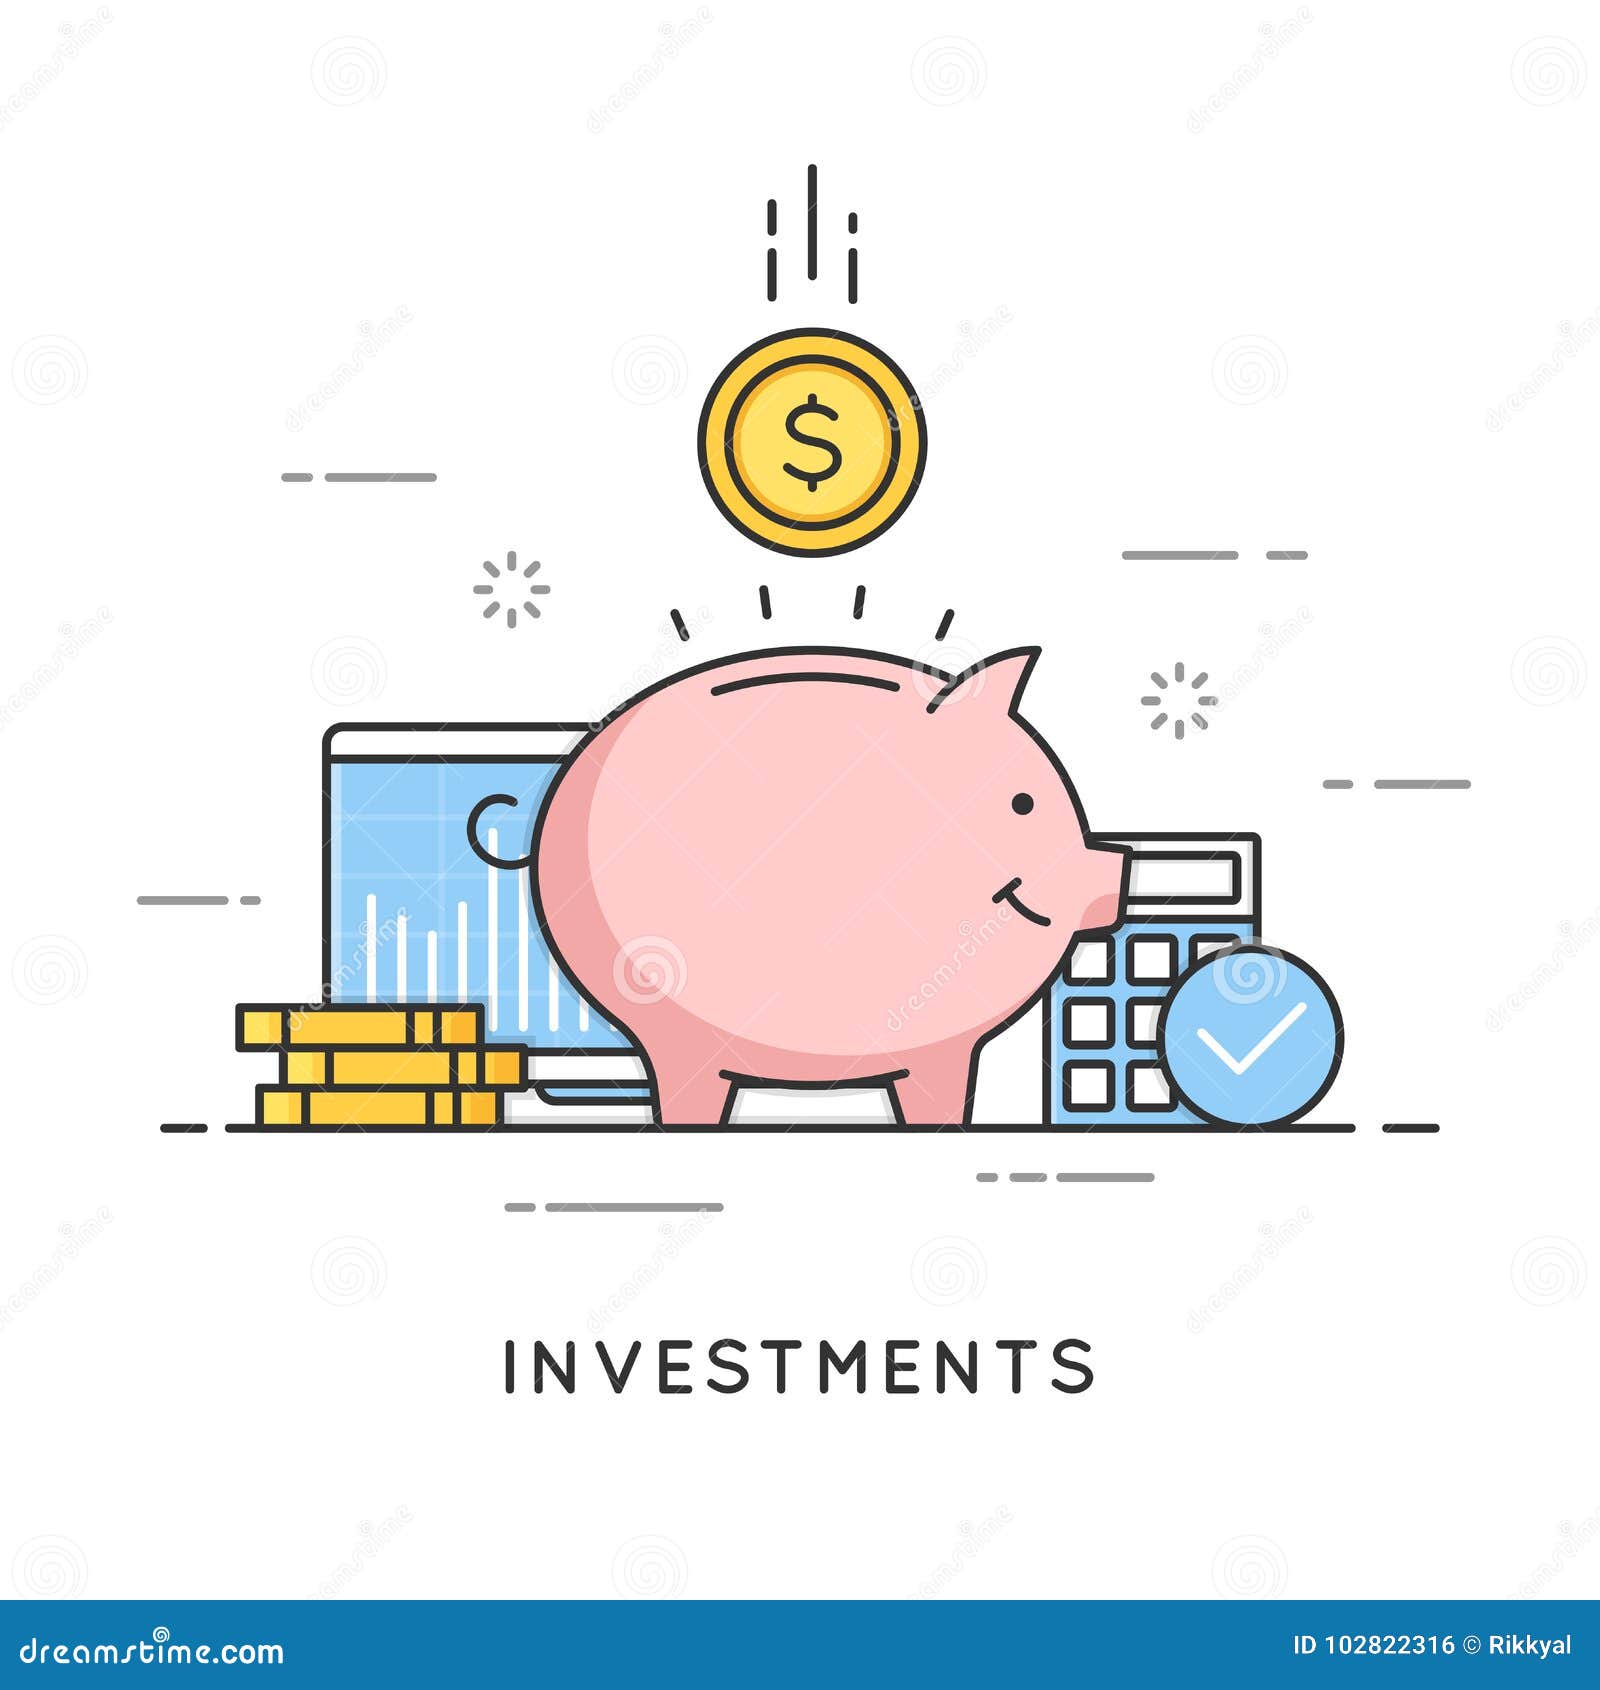 investments, money savings, budget management, financial profit.